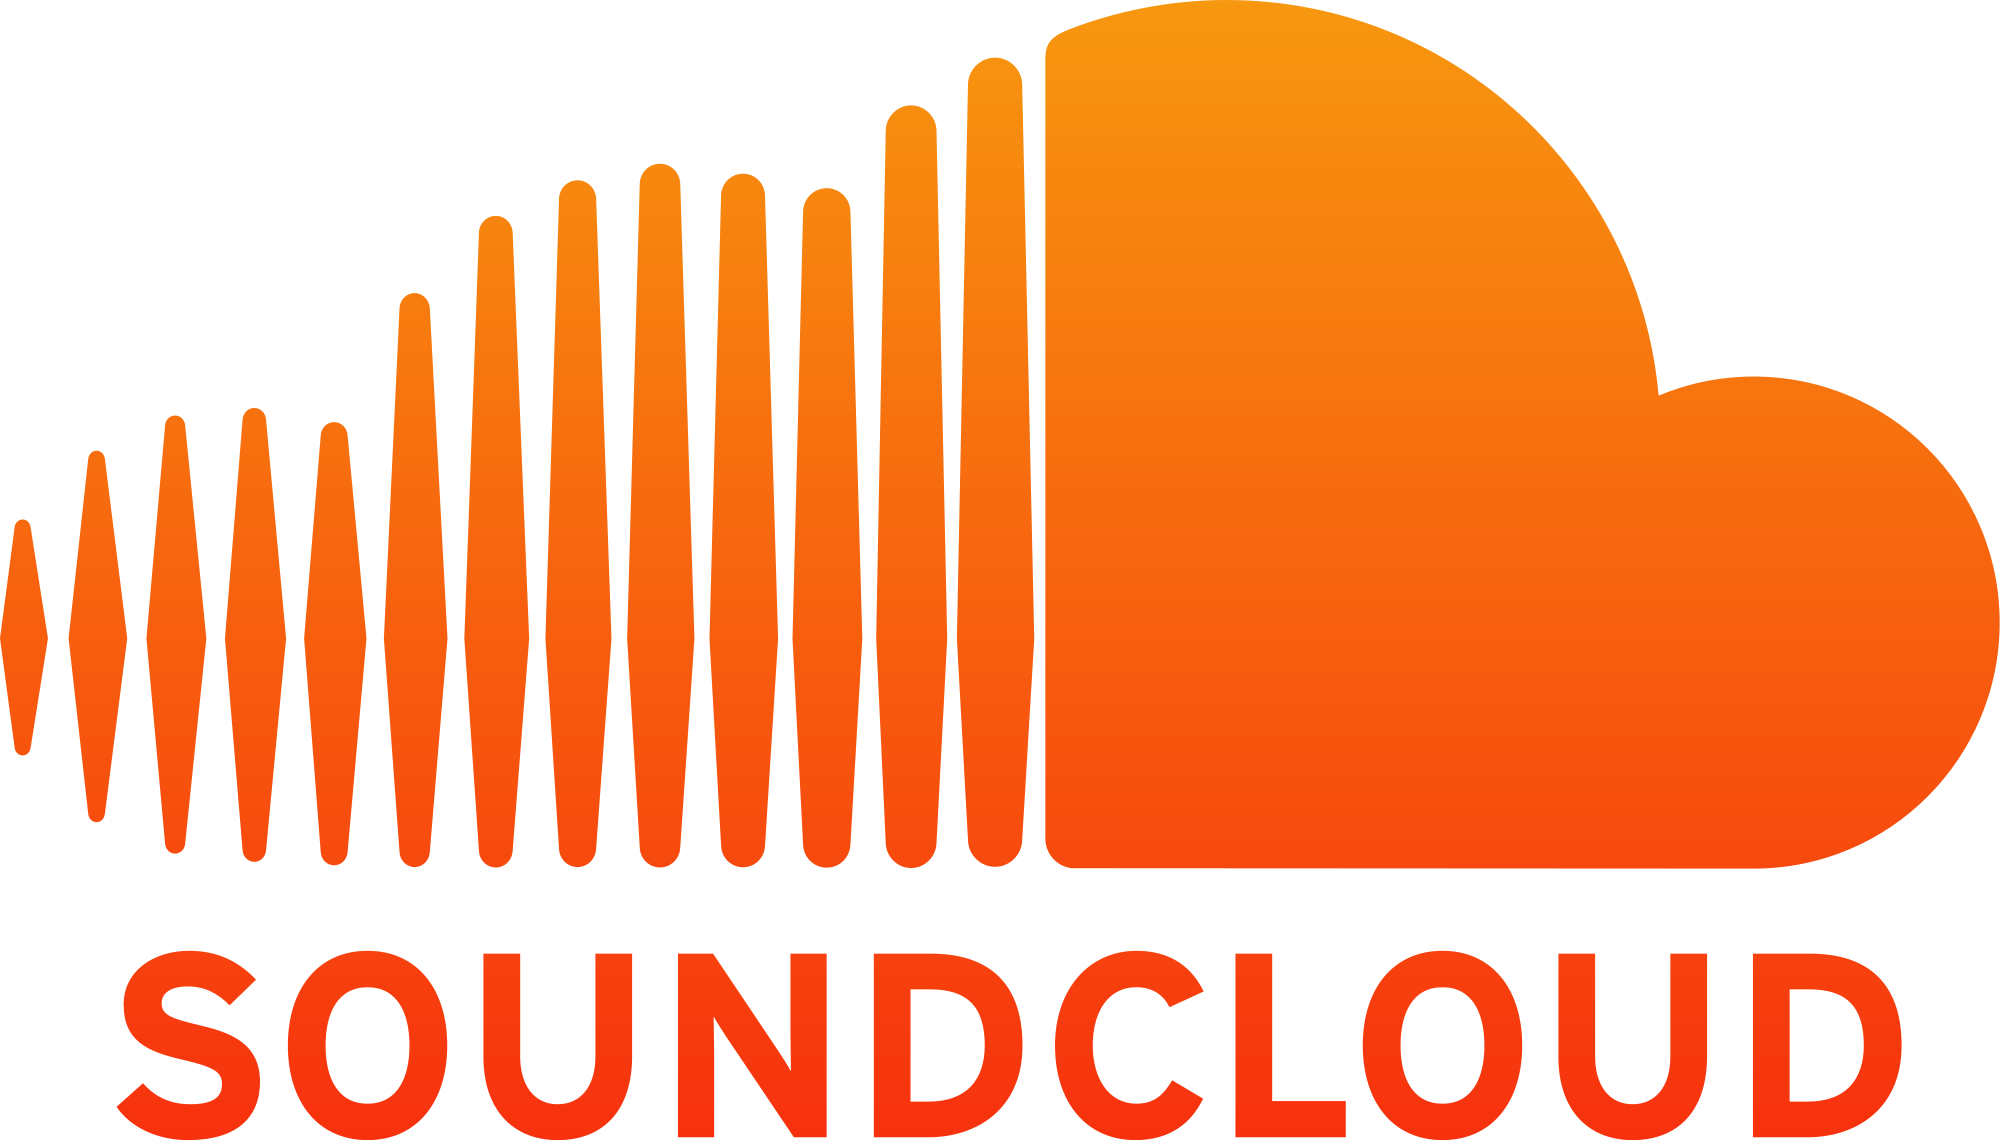 https://upload.wikimedia.org/wikipedia/fr/b/bb/SoundCloud_logo.png